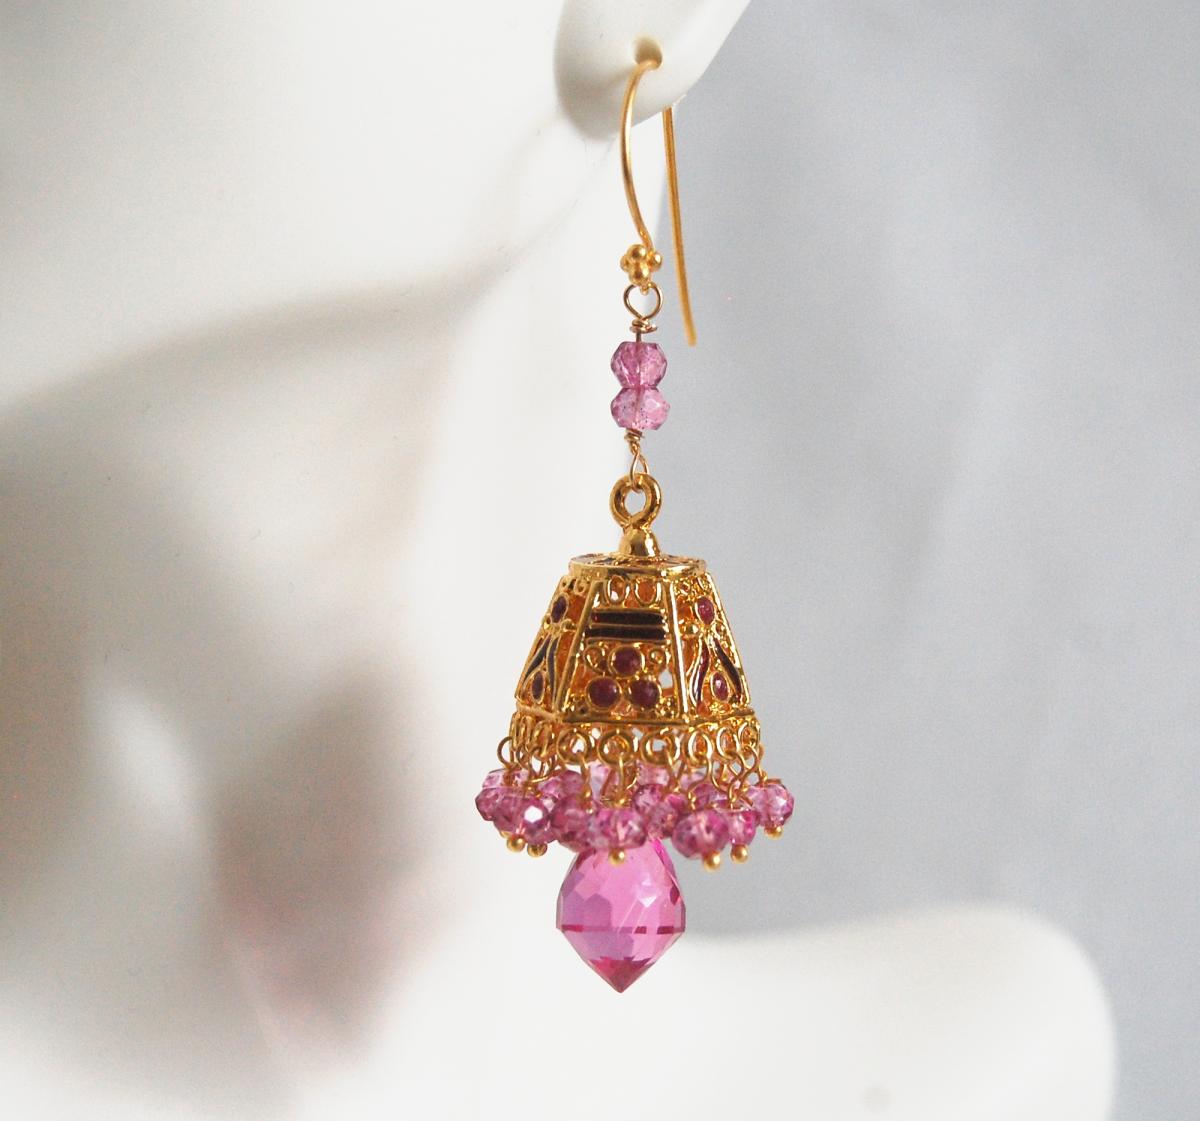 Gorgeous Pink Quartz Chandelier -mystic Rubelite Quartz Gold Enamel Lampshade Bell Chandelier Earringsdangle Drop Earrings